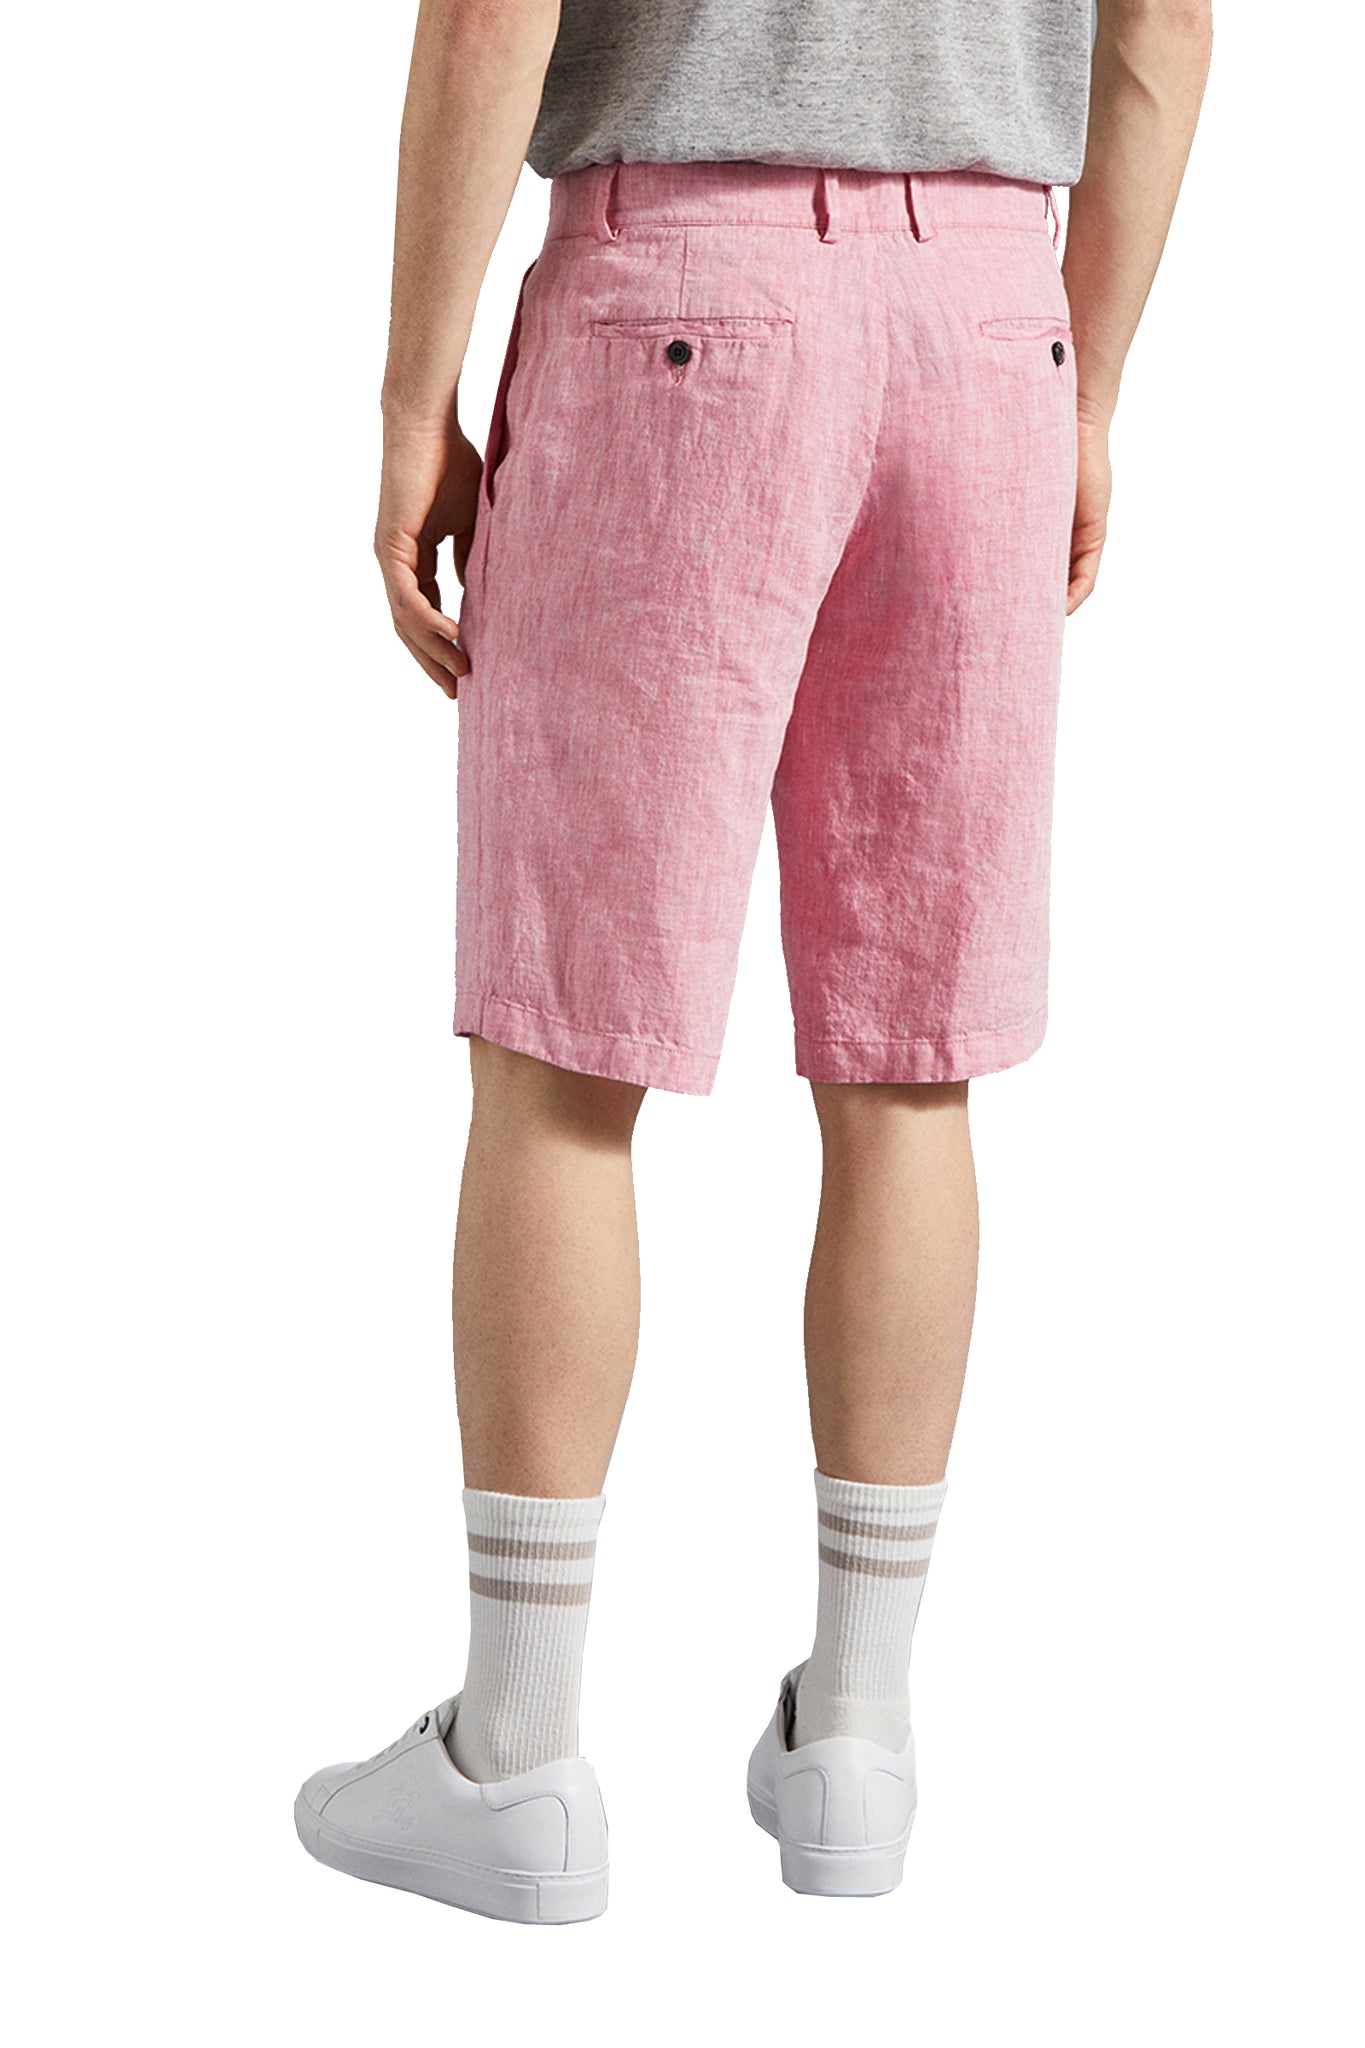 Linen Bermuda Shorts